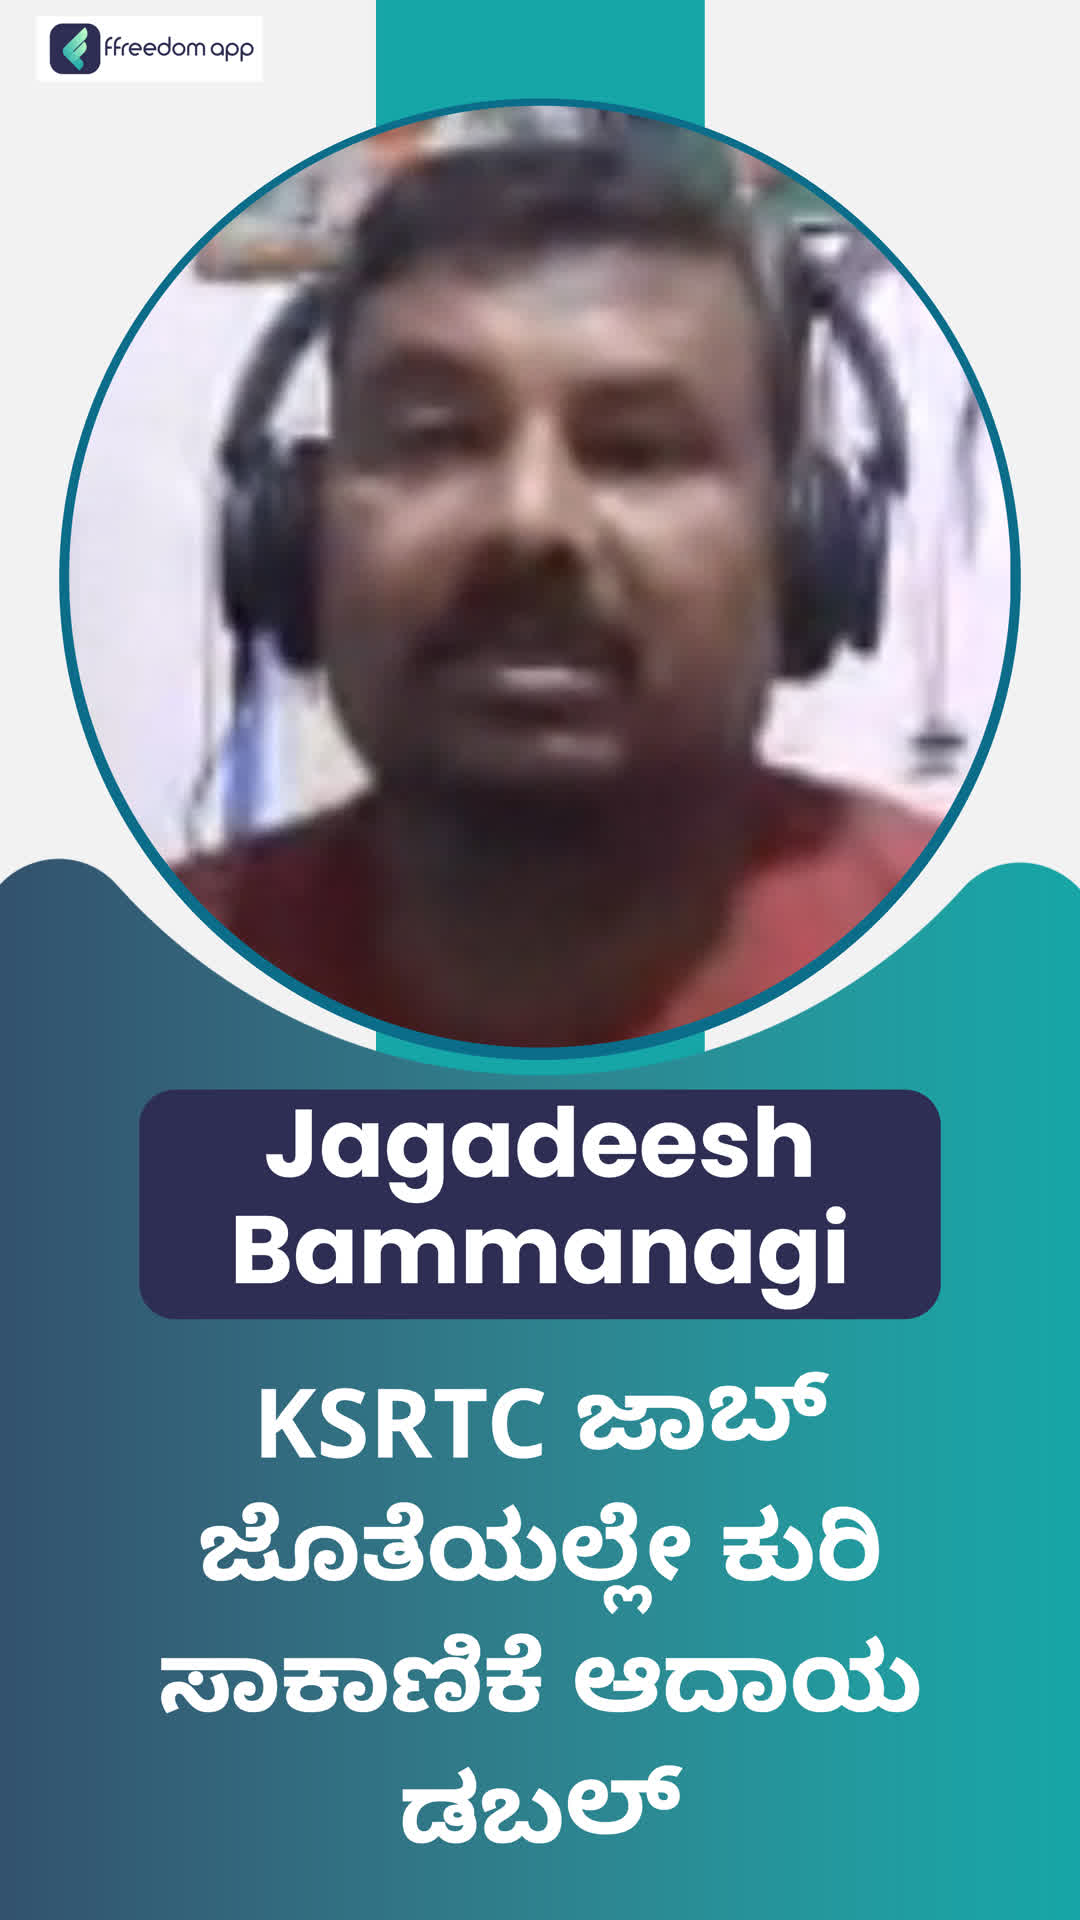 Jagadeesh Bammanagi's Honest Review of ffreedom app - Haveri ,Karnataka